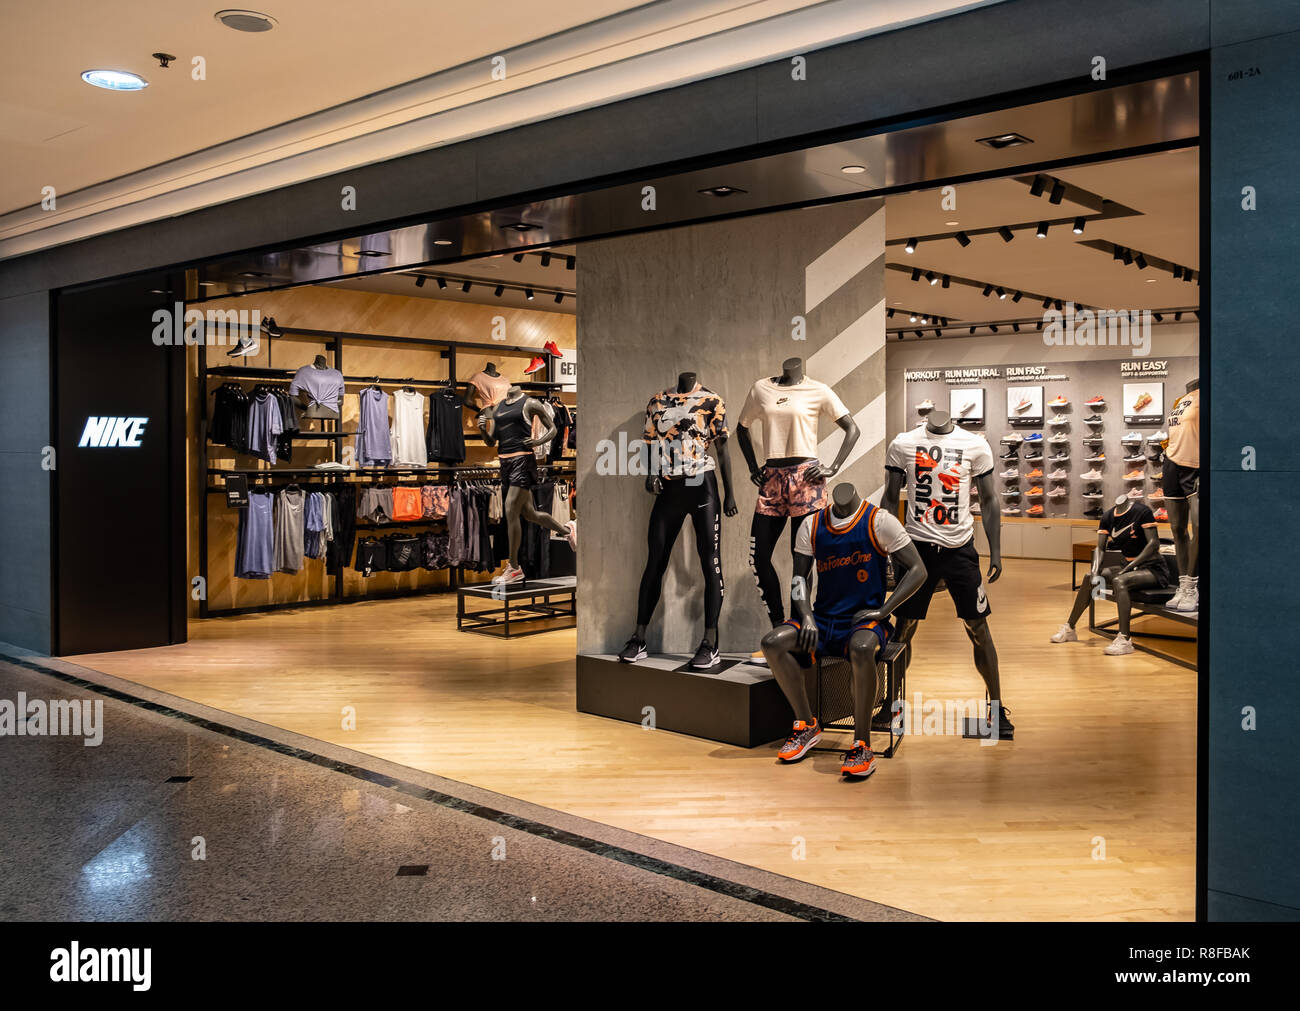 Hong Kong, April 7, 2019: Nike store in Hong Kong Stock Photo - Alamy